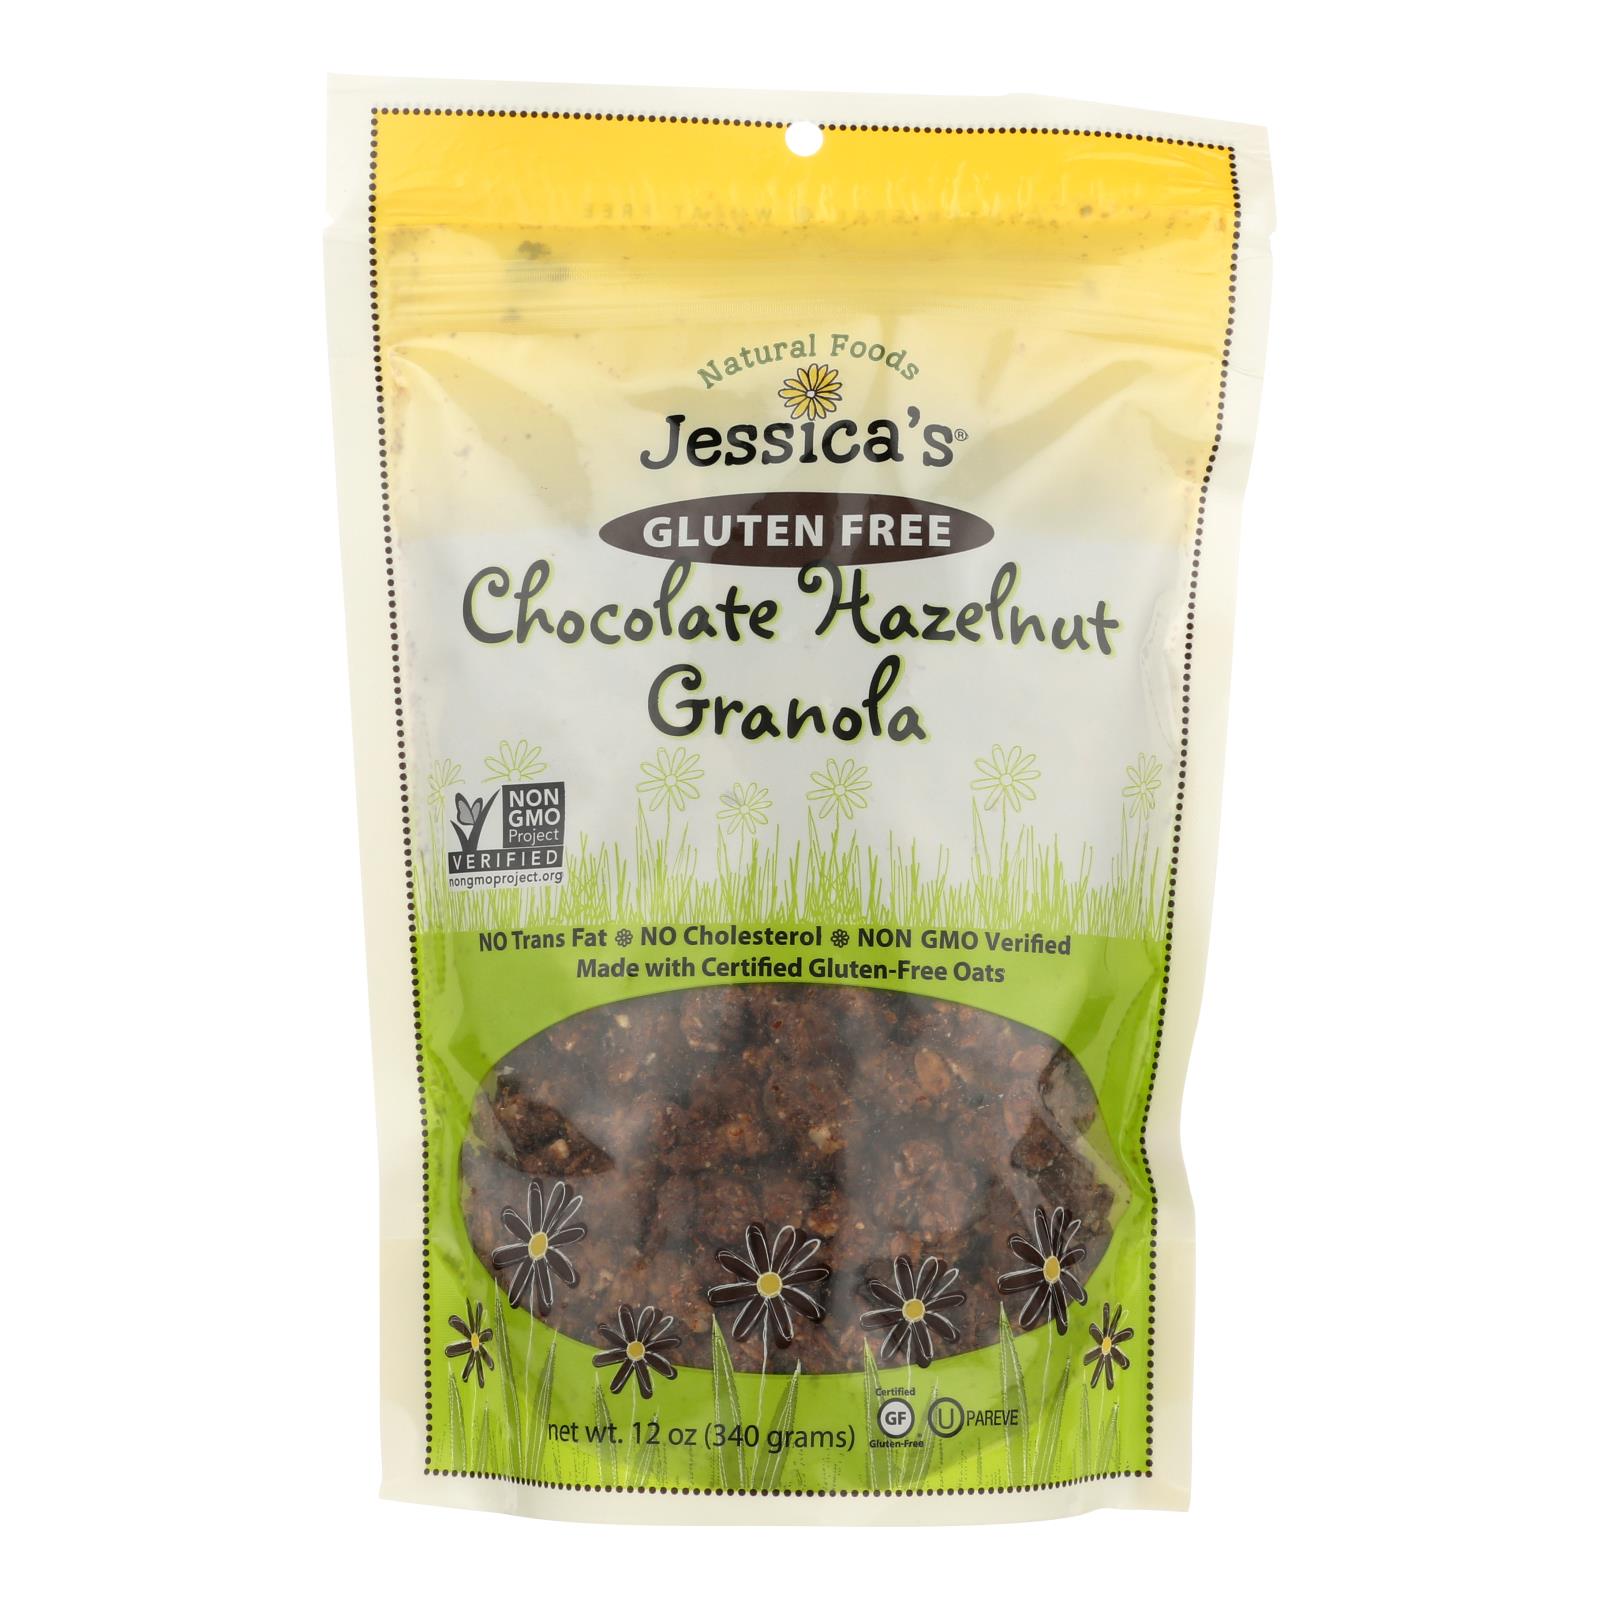 Natural Foods Jessica's Chocolate Hazelnut Granola - 12개 묶음상품 - 11 OZ